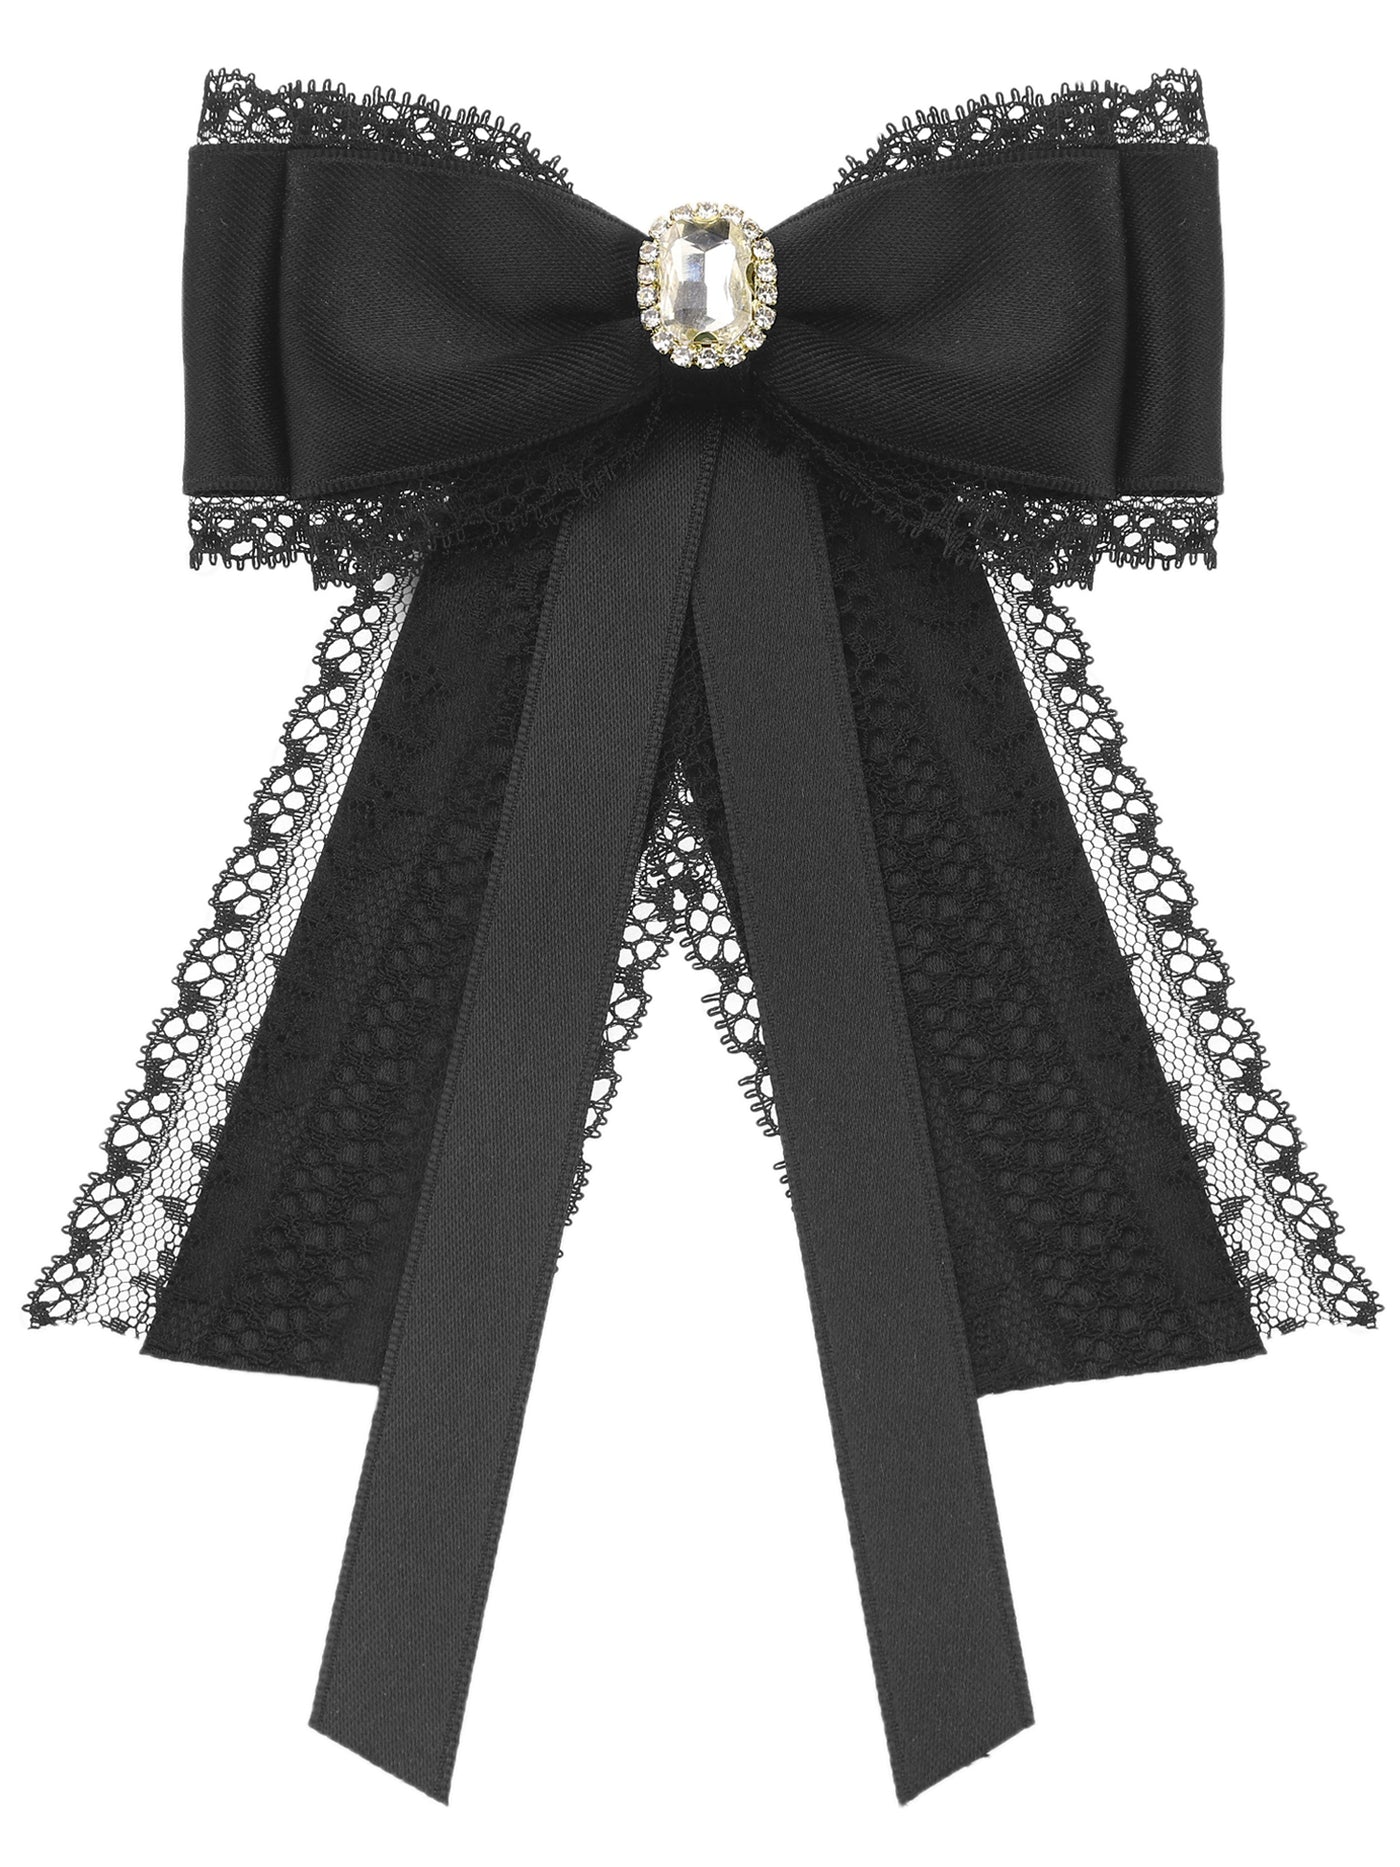 Women Lace Ribbon Brooch Rhinestone Pearl Necktie Pin Elegant Dress Bow  Brooches